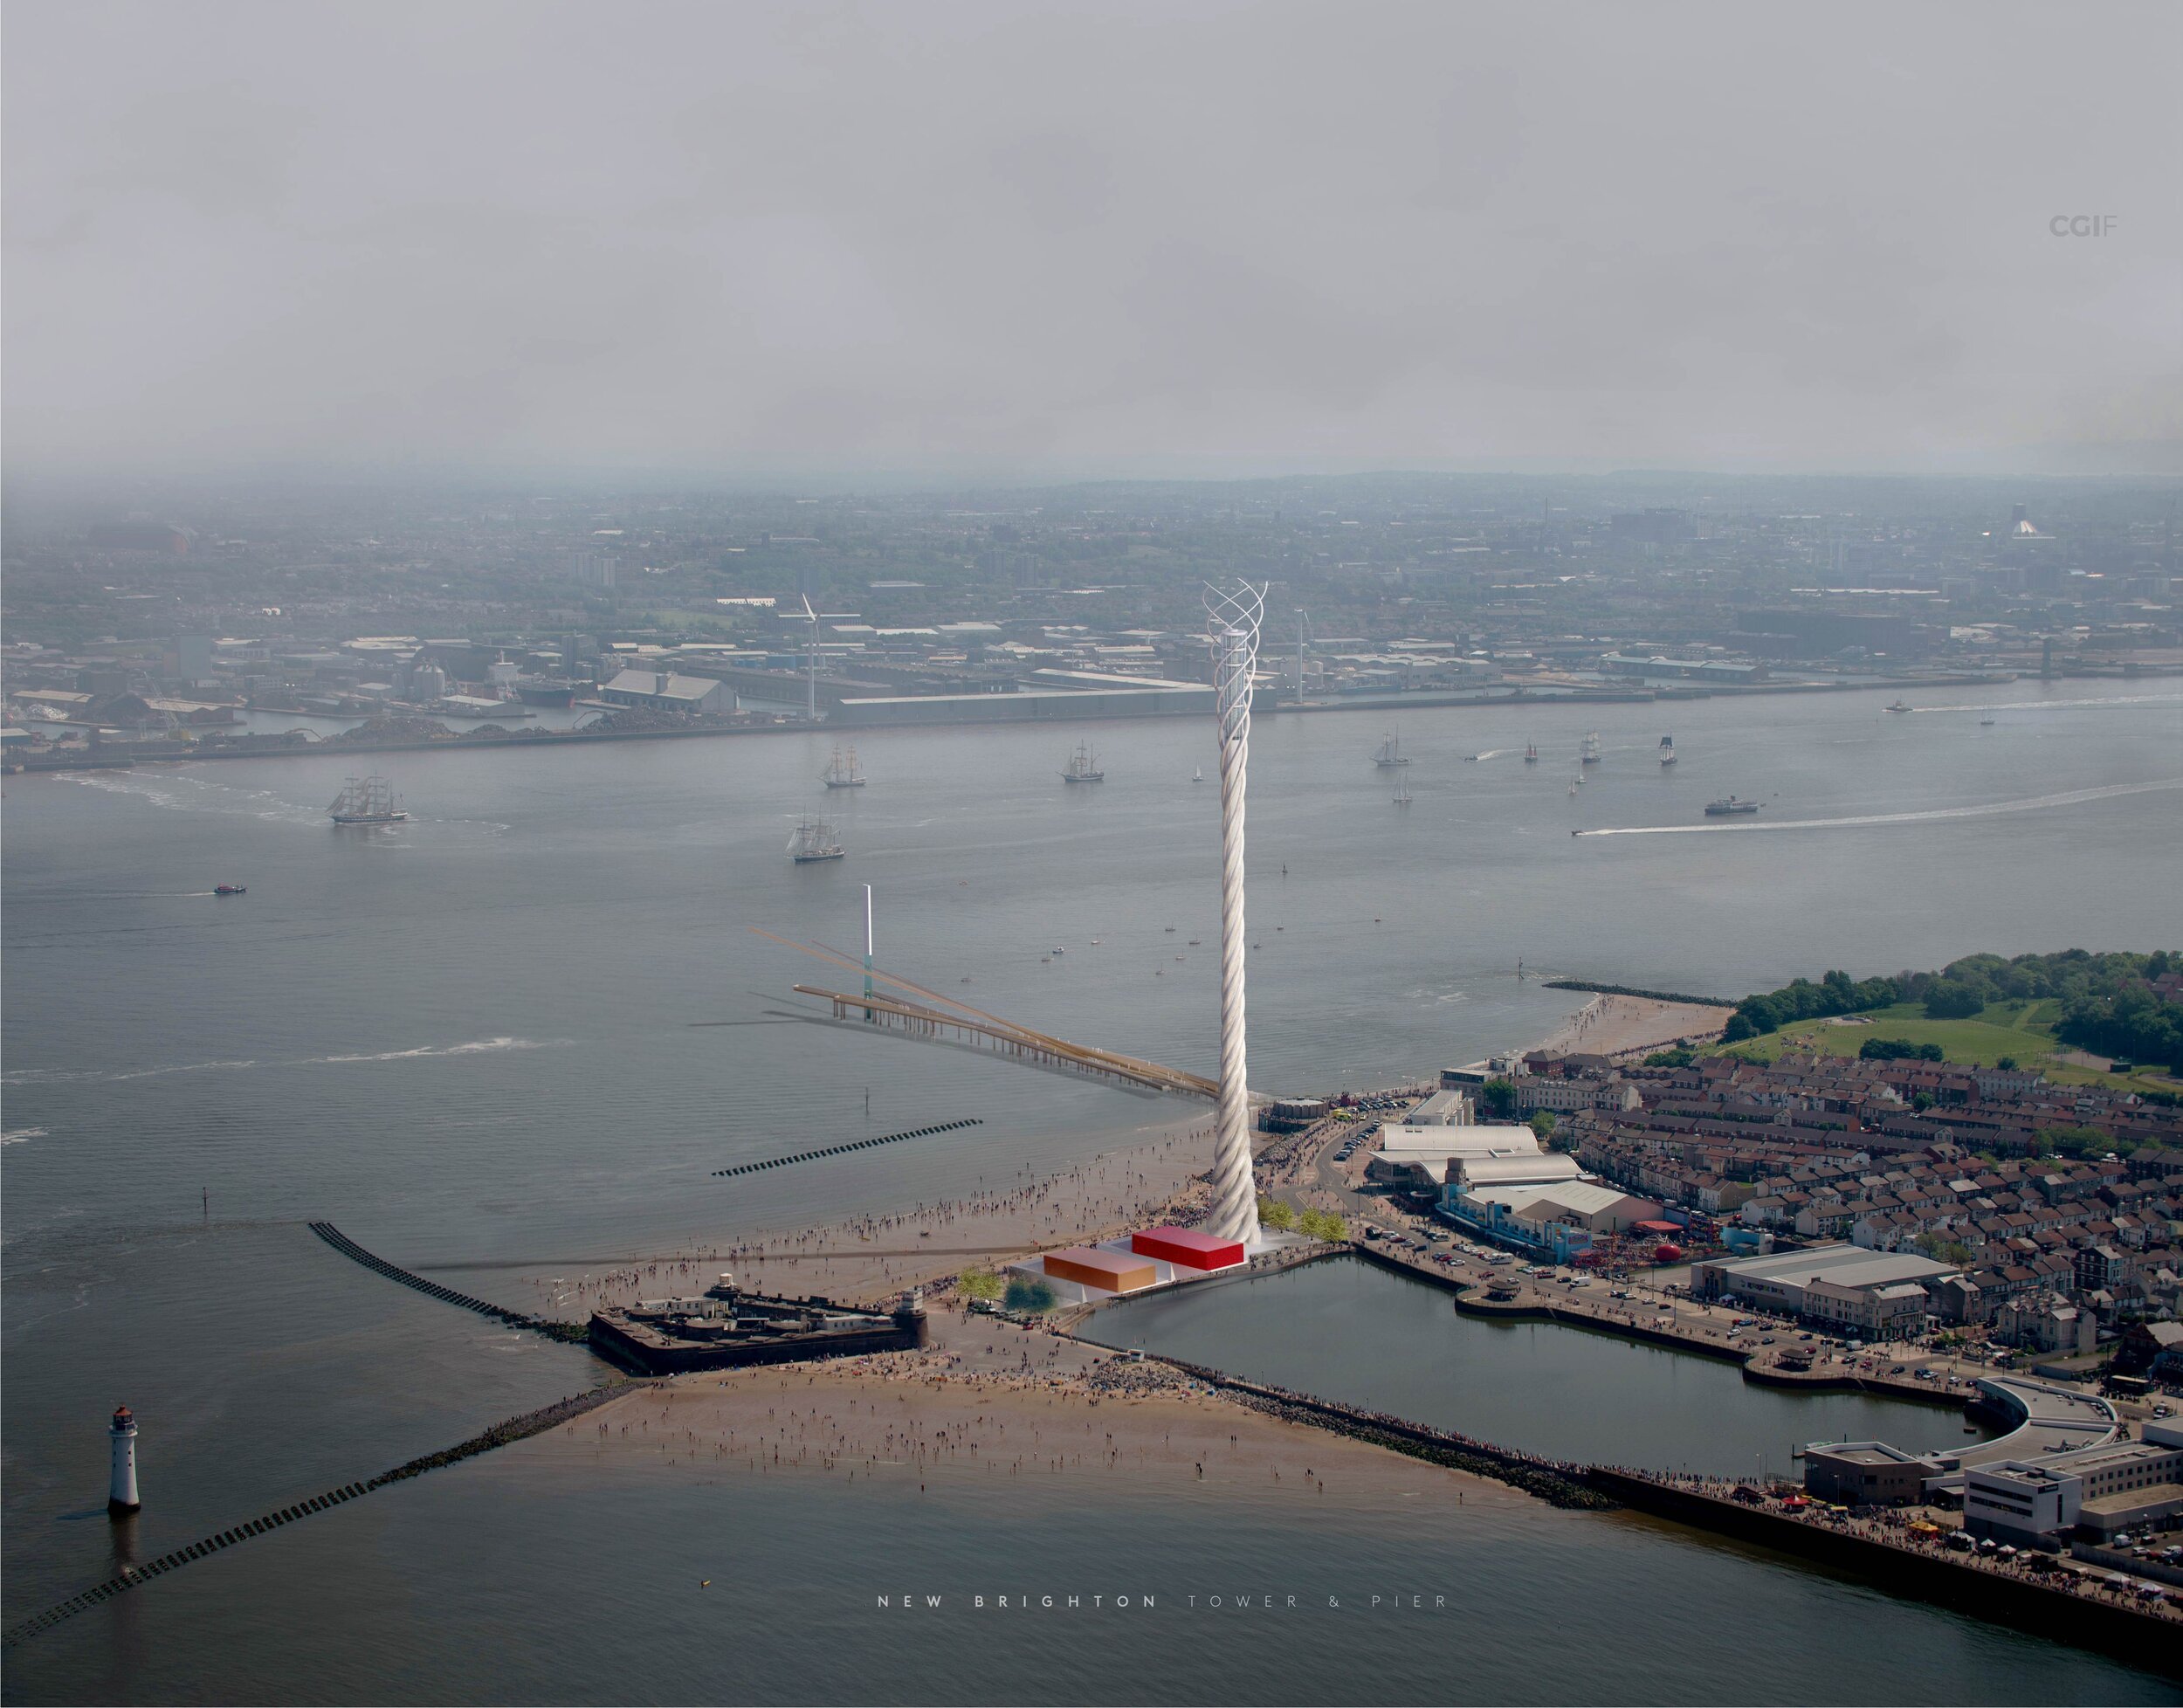 New+Brighton+Tower+and+Pier.jpg